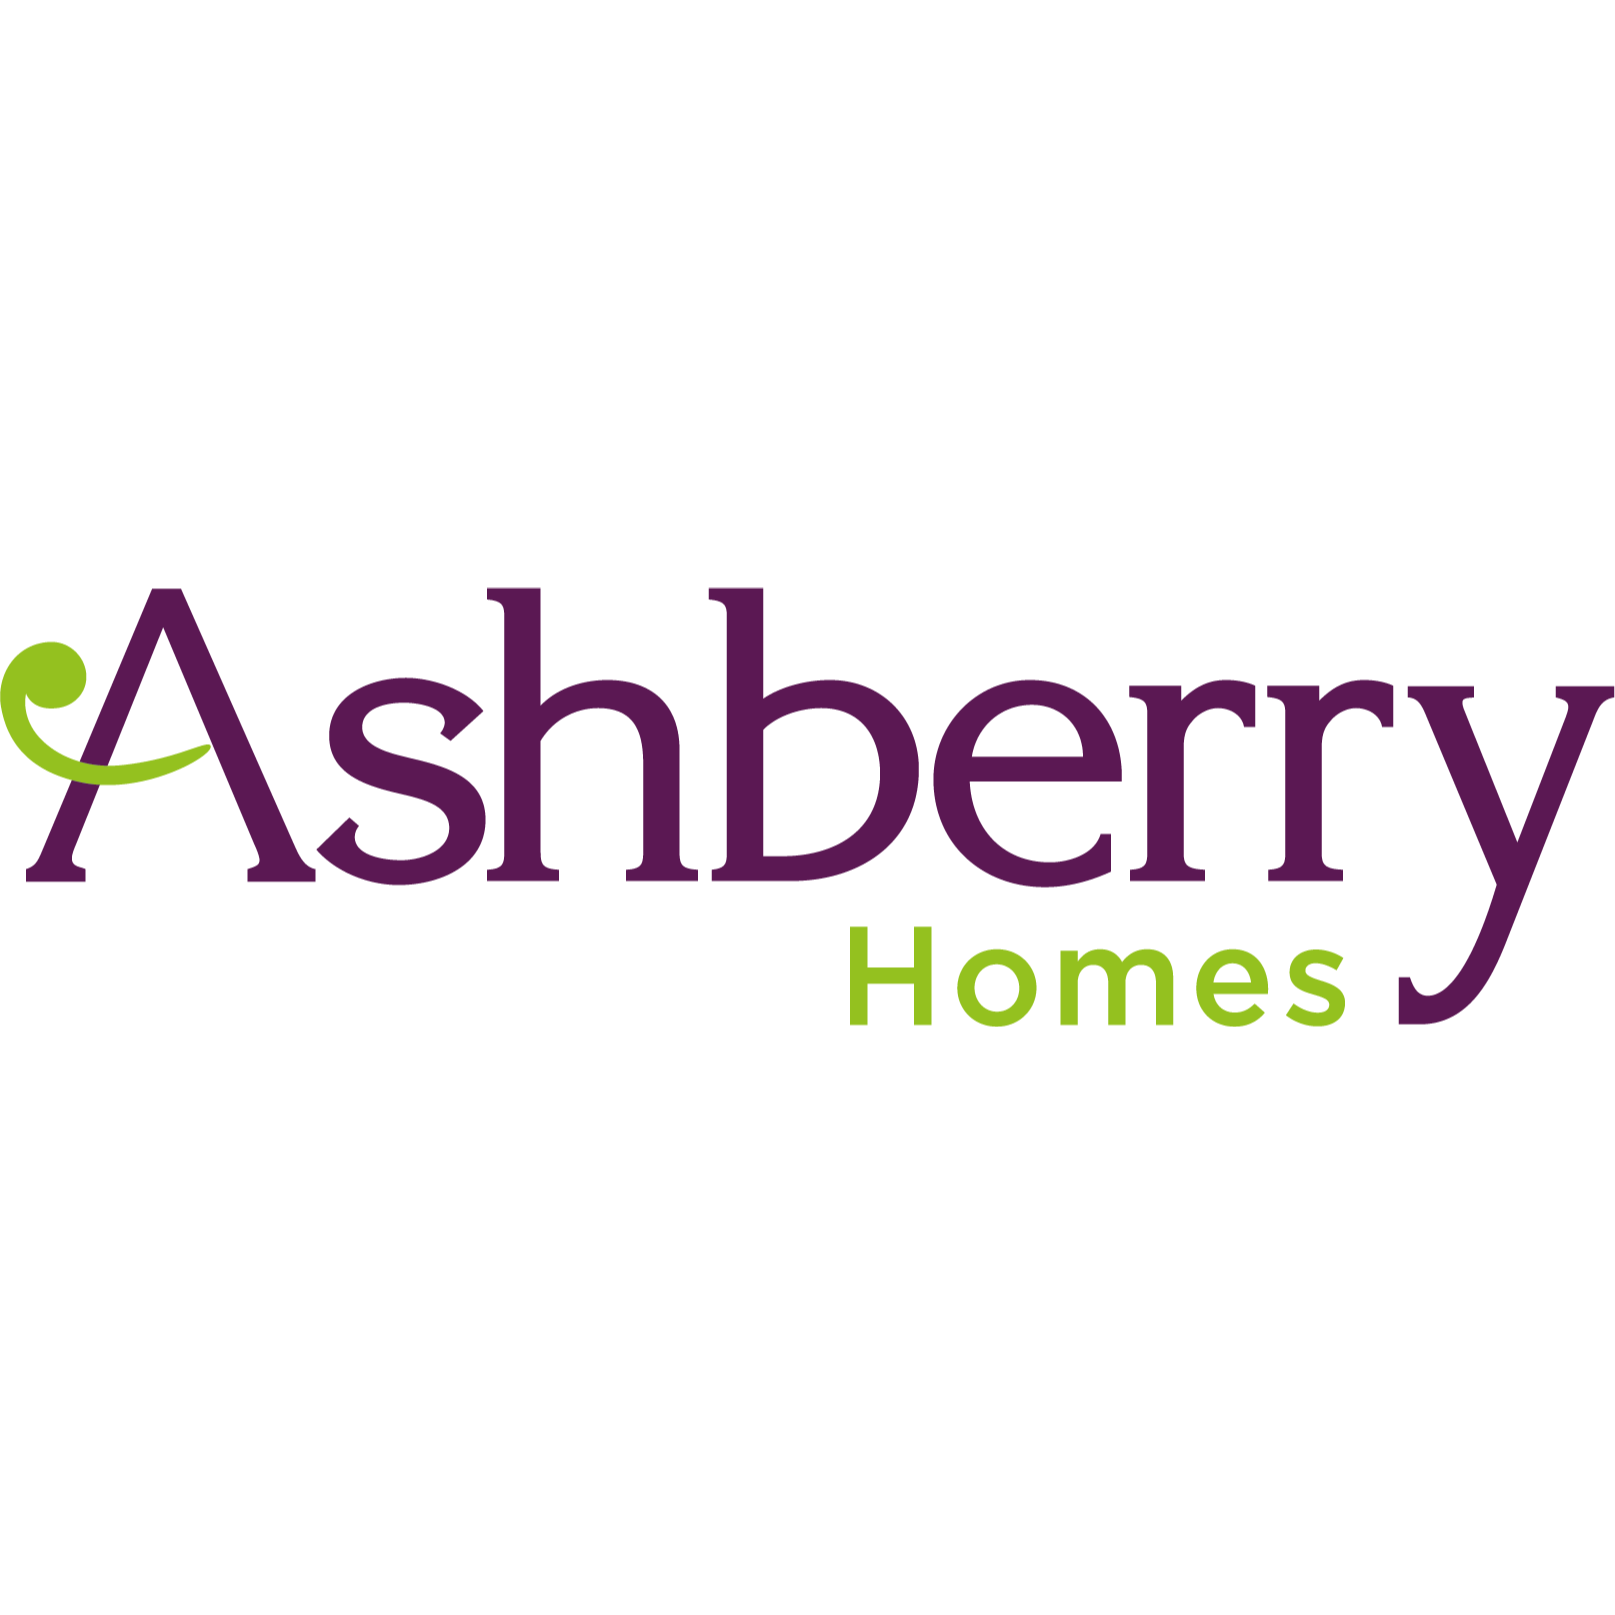 Ashberry Homes - Saxon Heath Logo